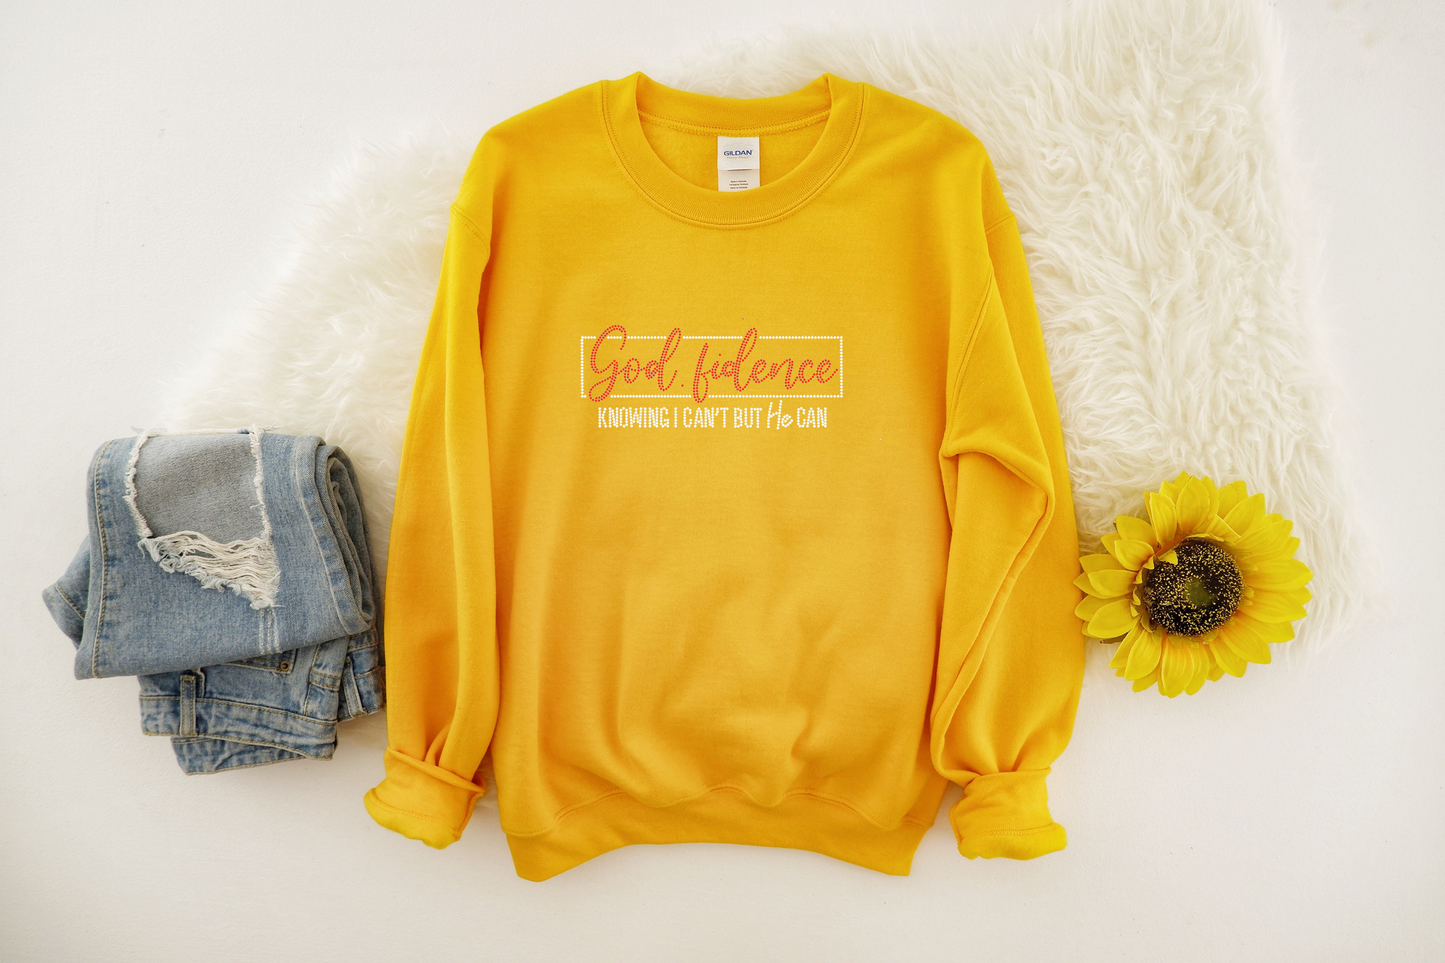 Godfidence Rhinestone hoodies/sweatshirts